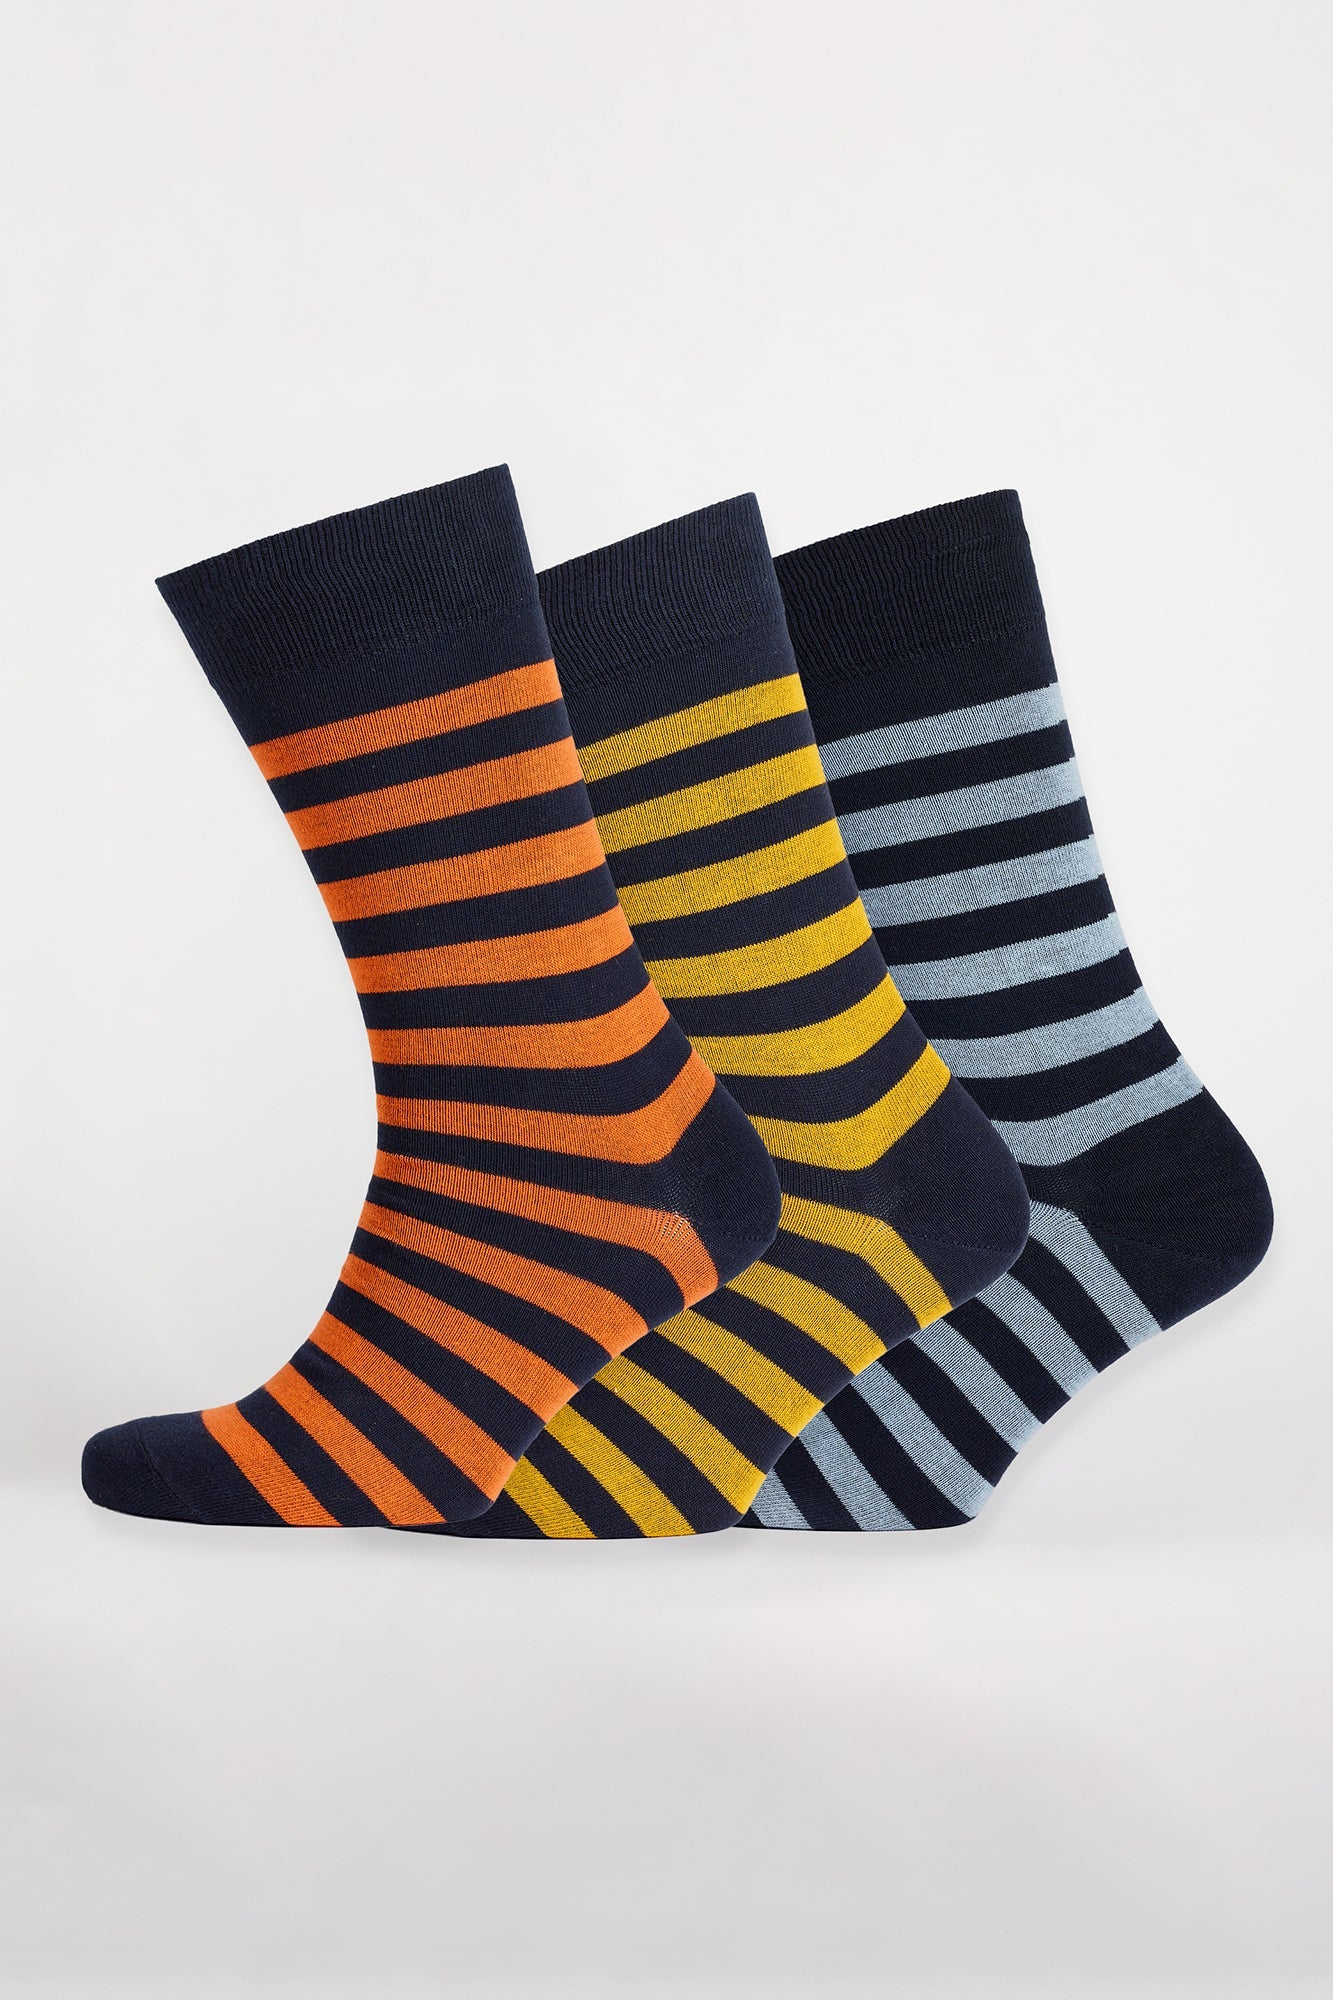 SOCKS Tagged Socks - Community Clothing